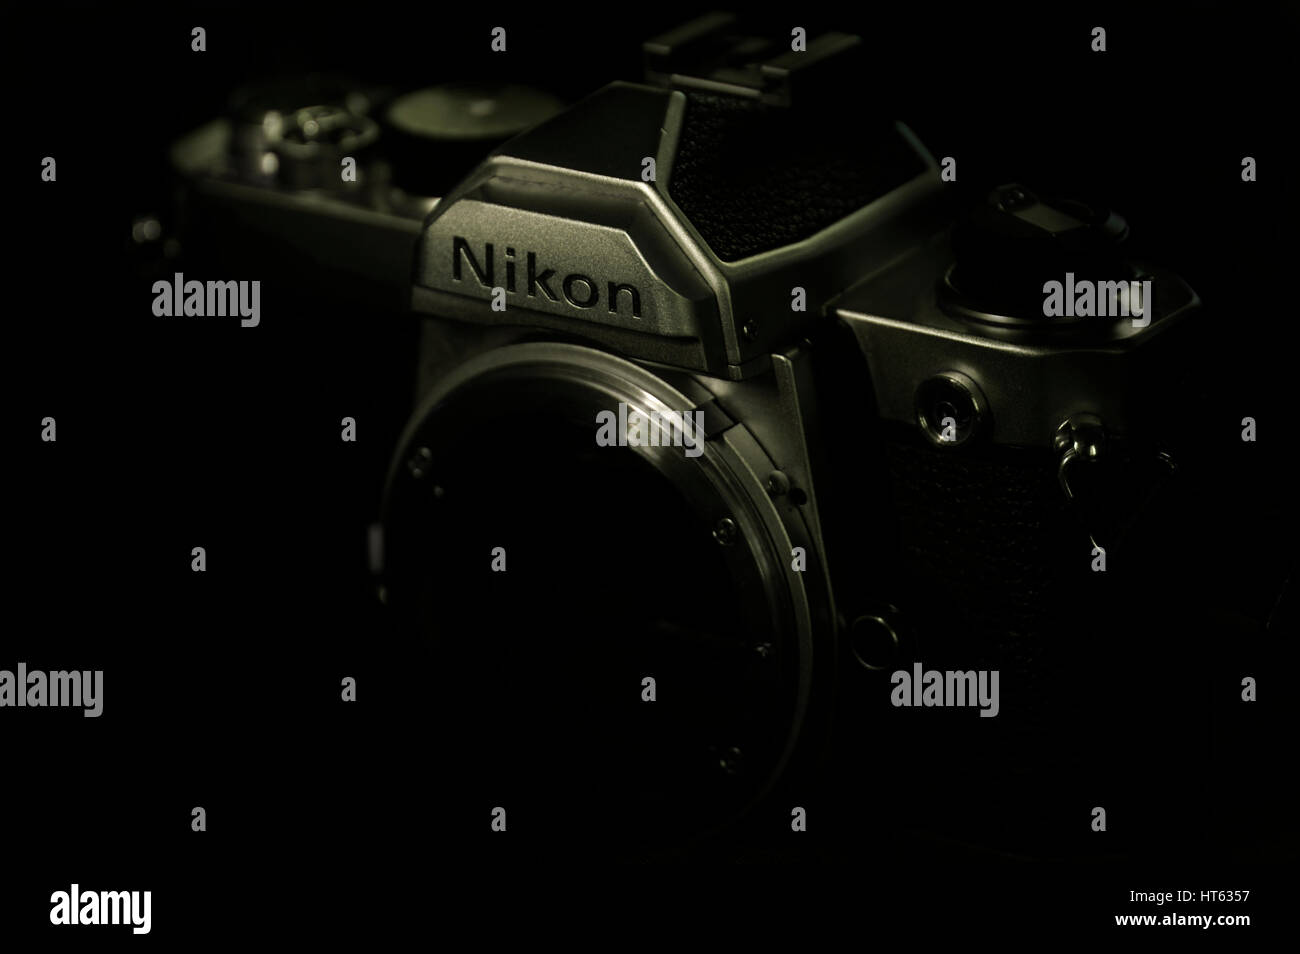 Nikon FM 35mm SLR camera body Stock Photo